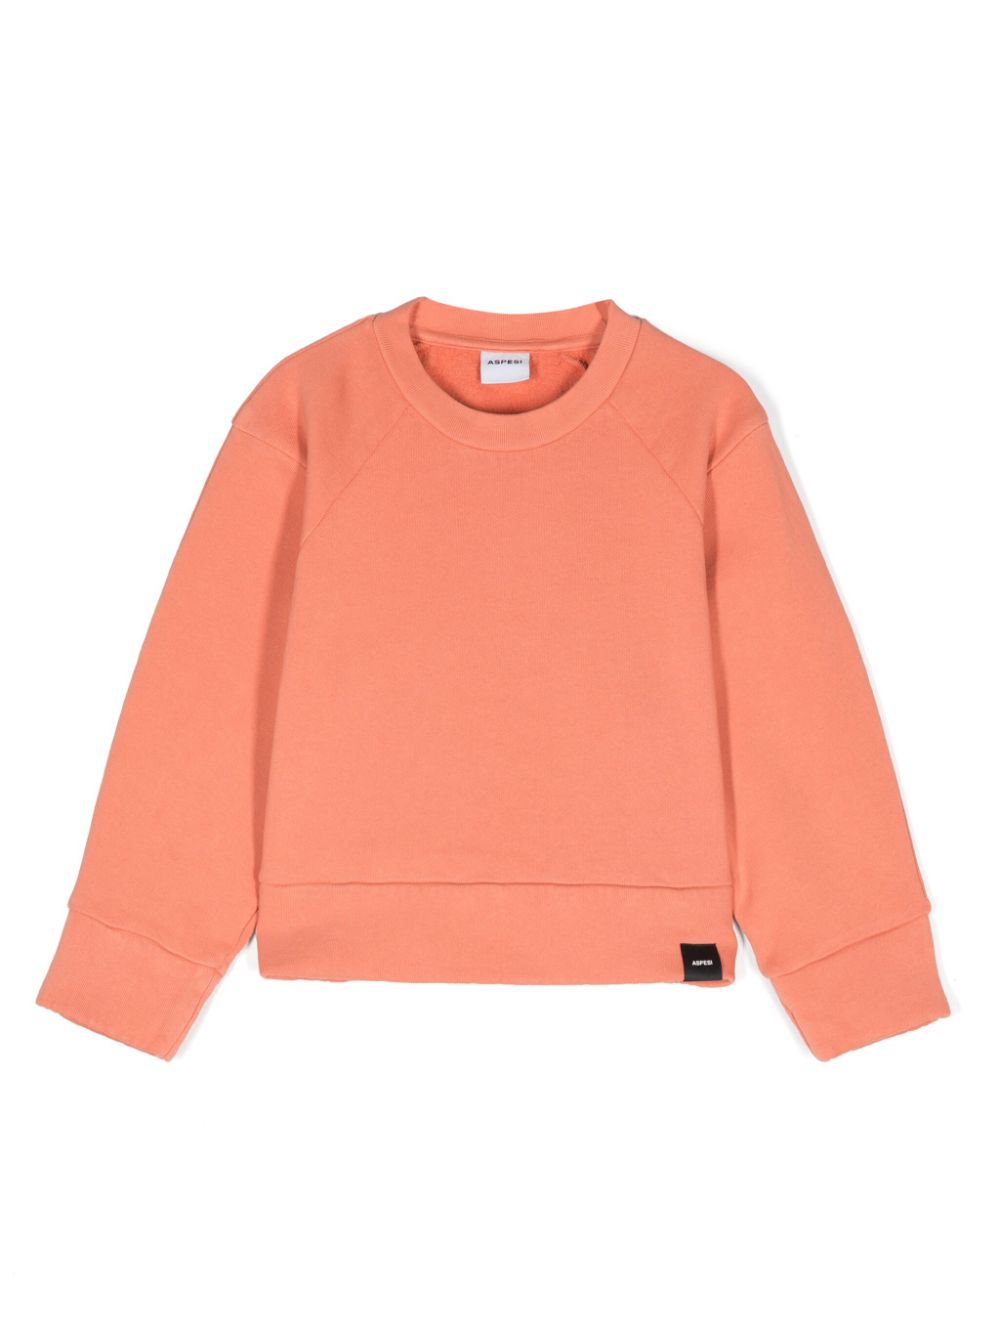 Aspesi Kids logo-tag cotton sweatshirt - Orange von Aspesi Kids